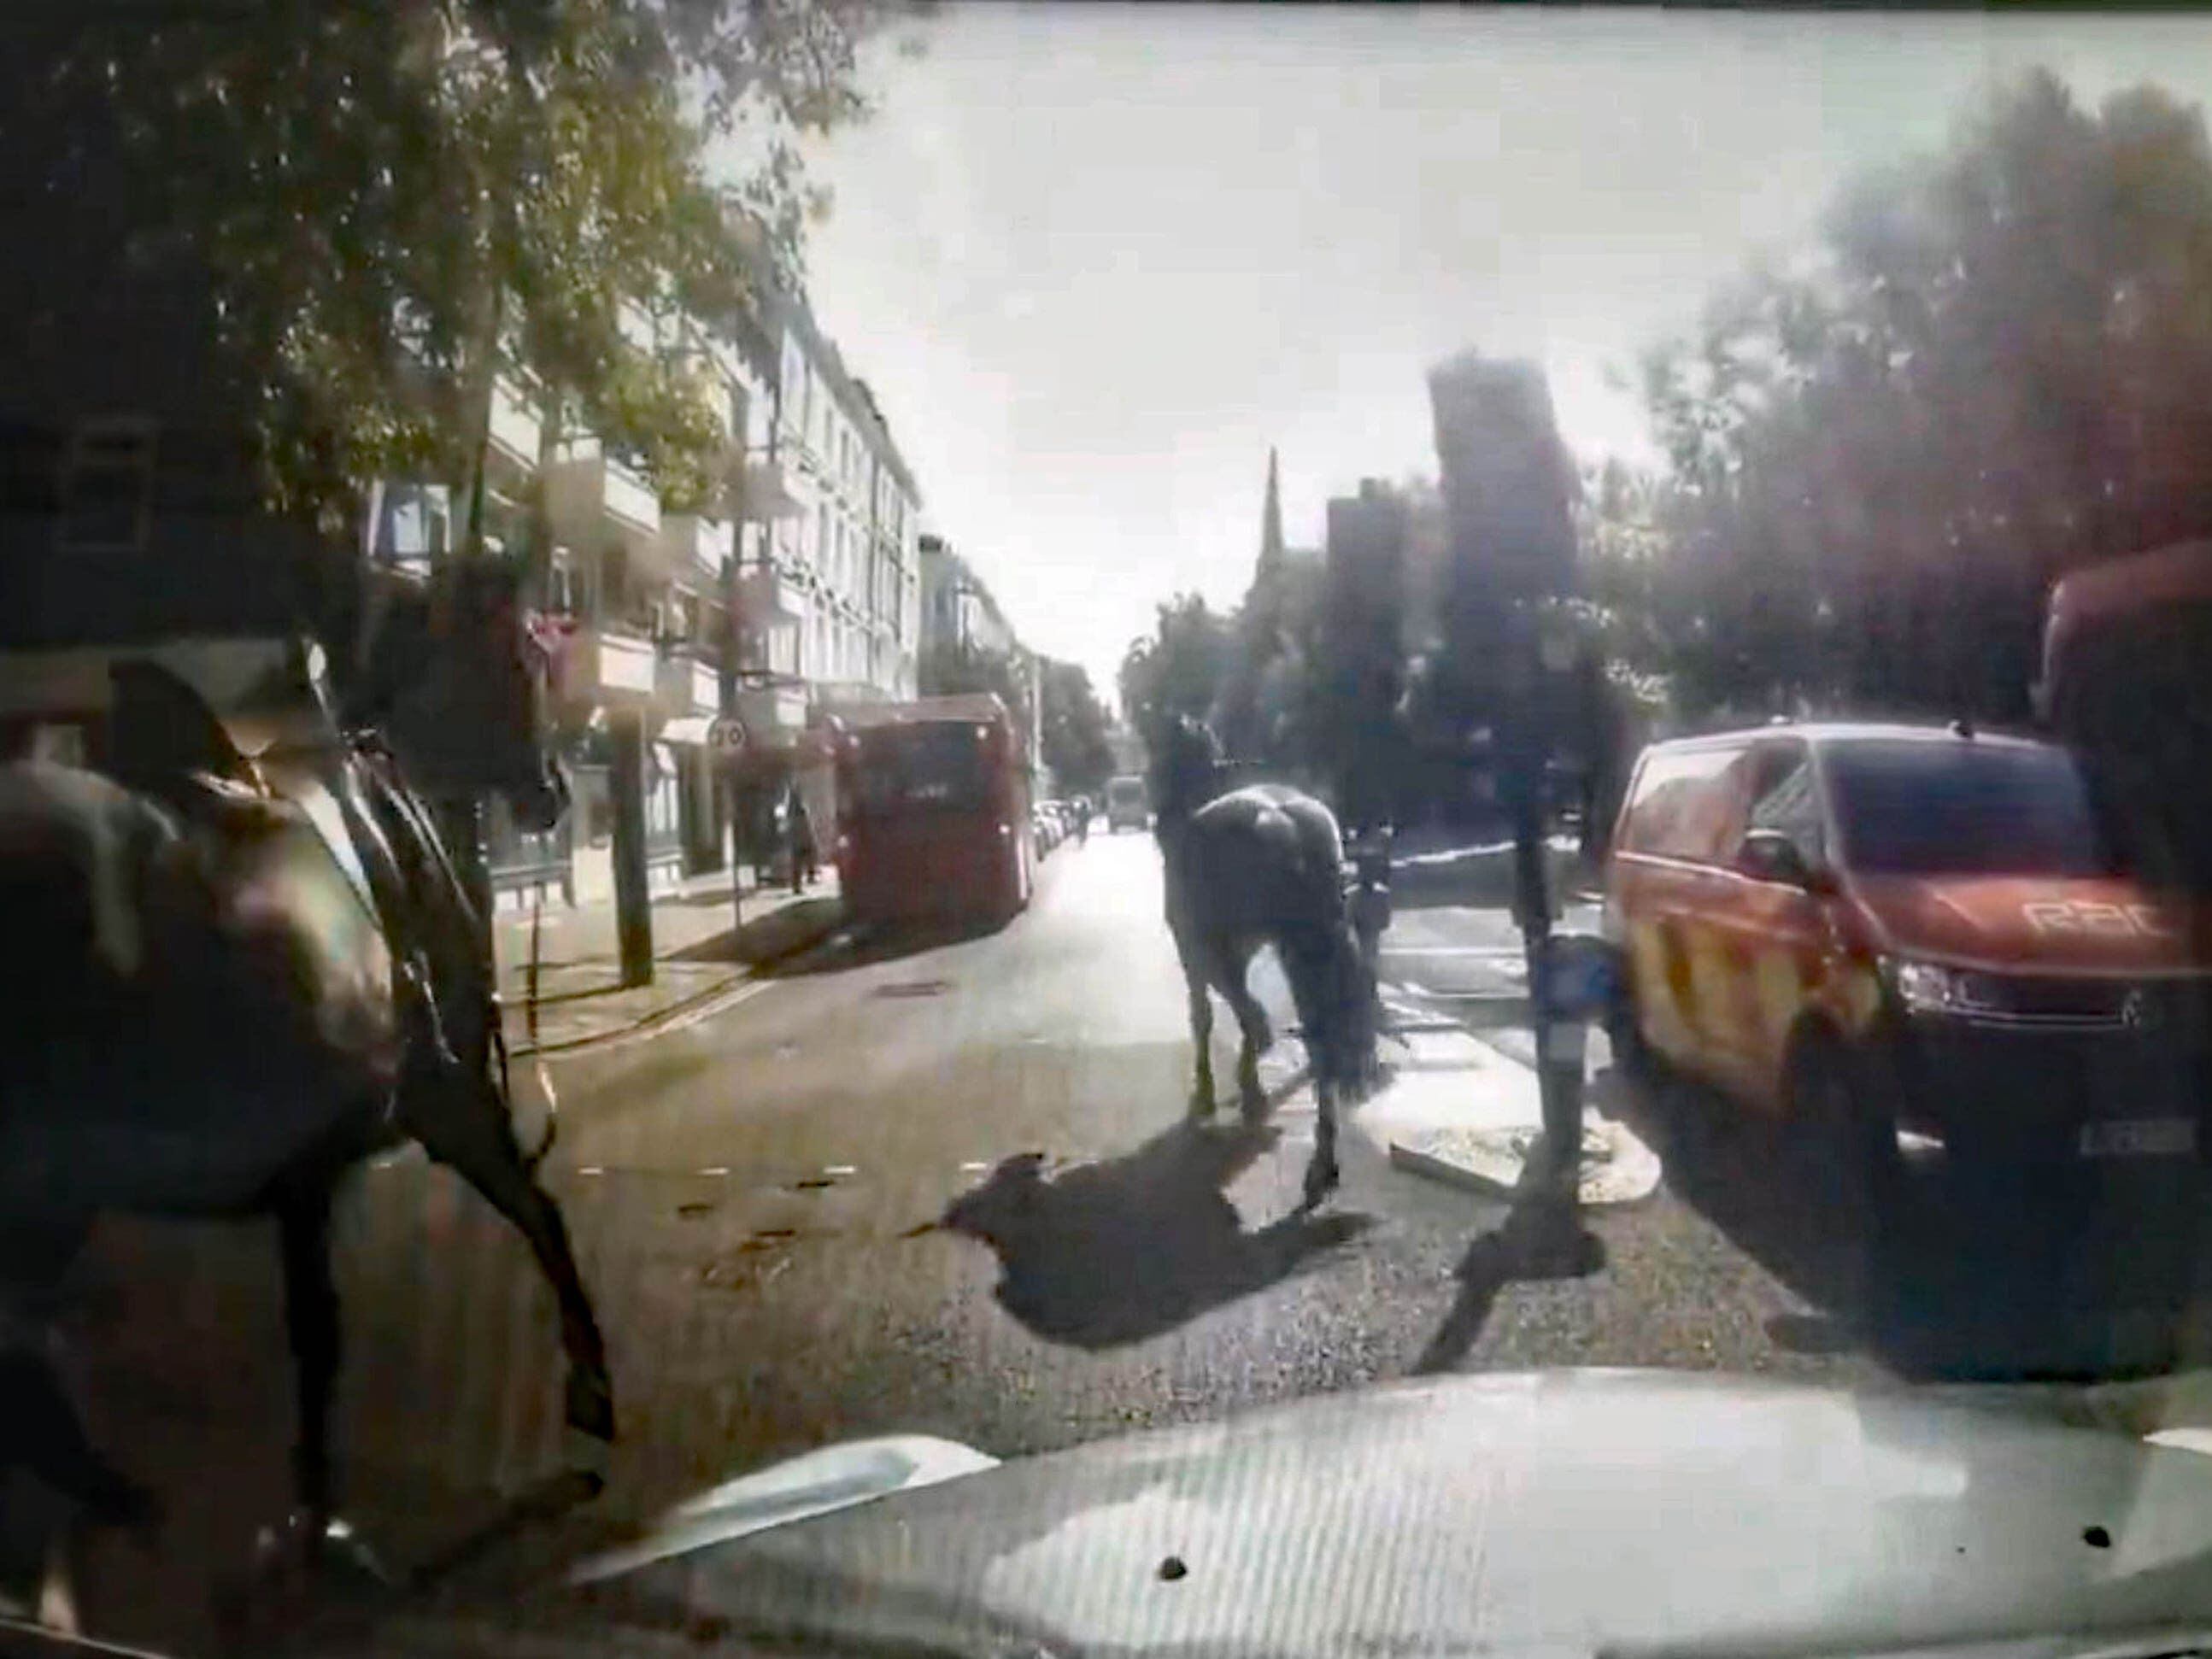 Three runaway military horses bolt through London after losing riders